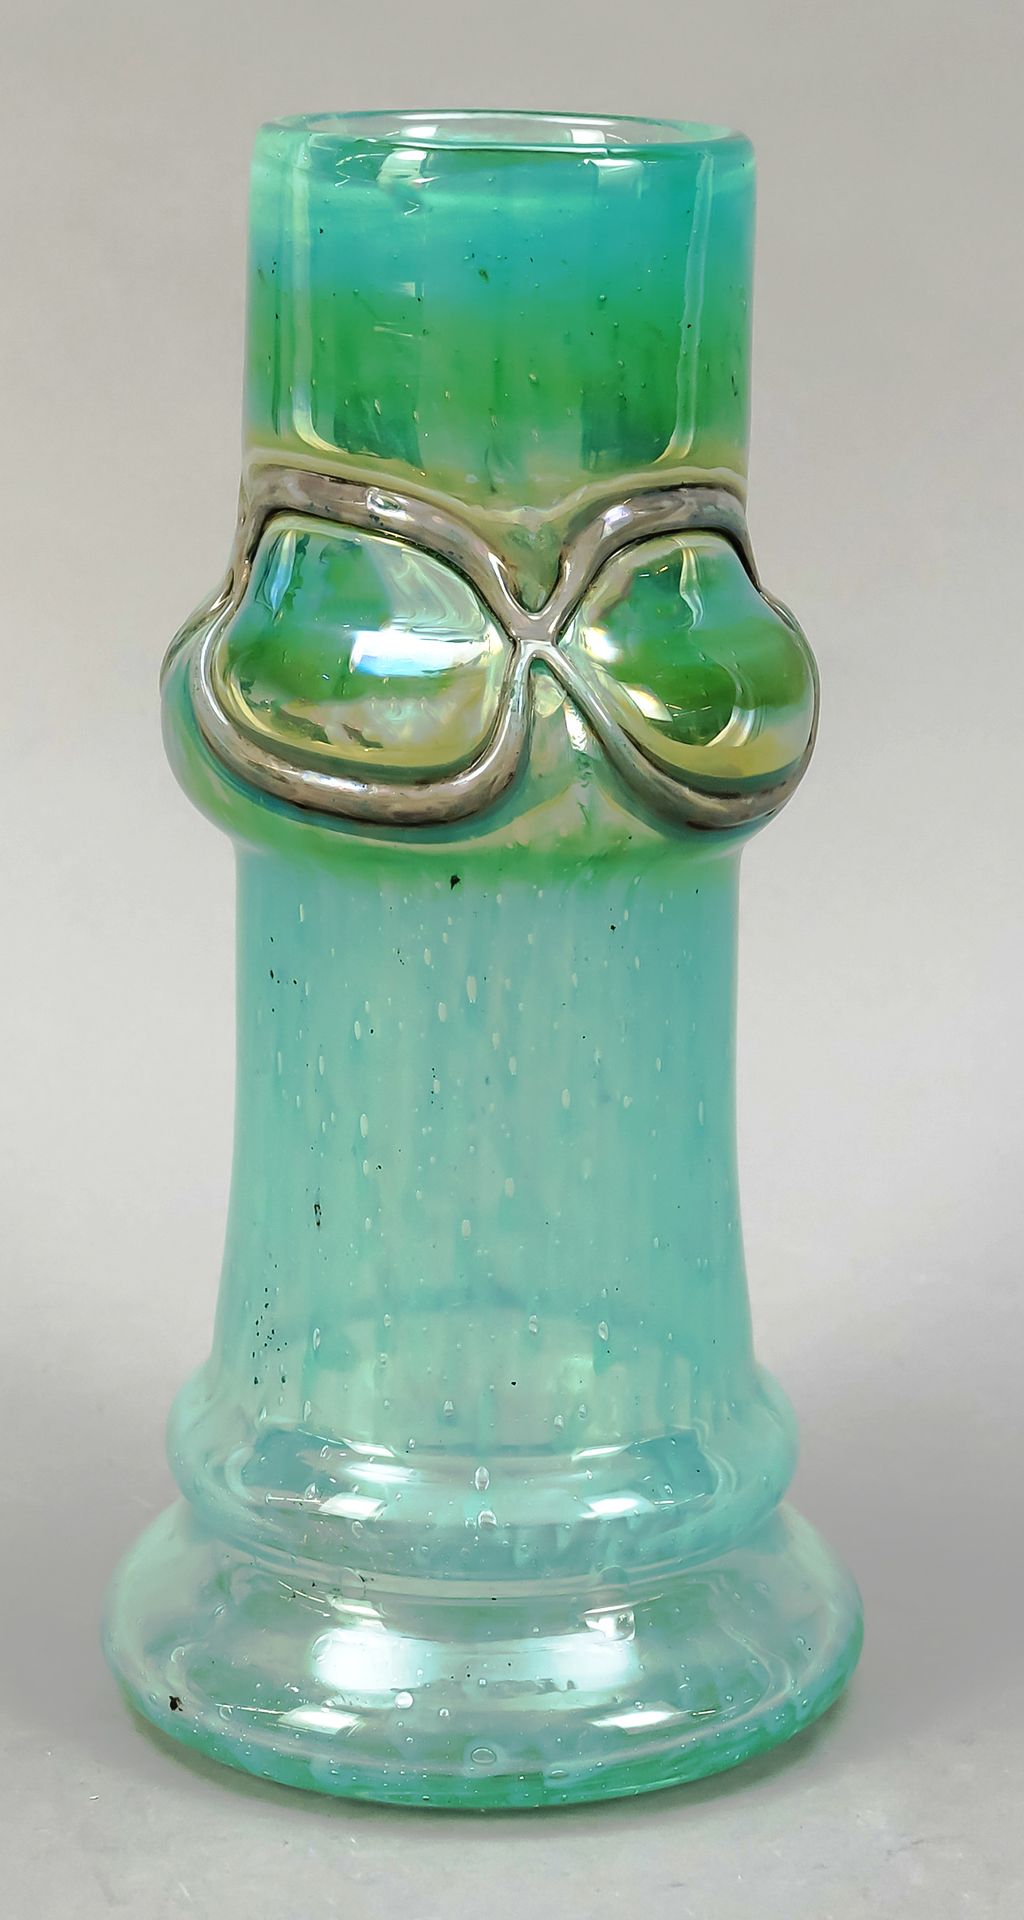 Null 花瓶，20世纪，圆形支架，瓶身有锥形壁，上部隆起，透明玻璃上有绿色粉末熔体和灰色带状熔体，高26厘米